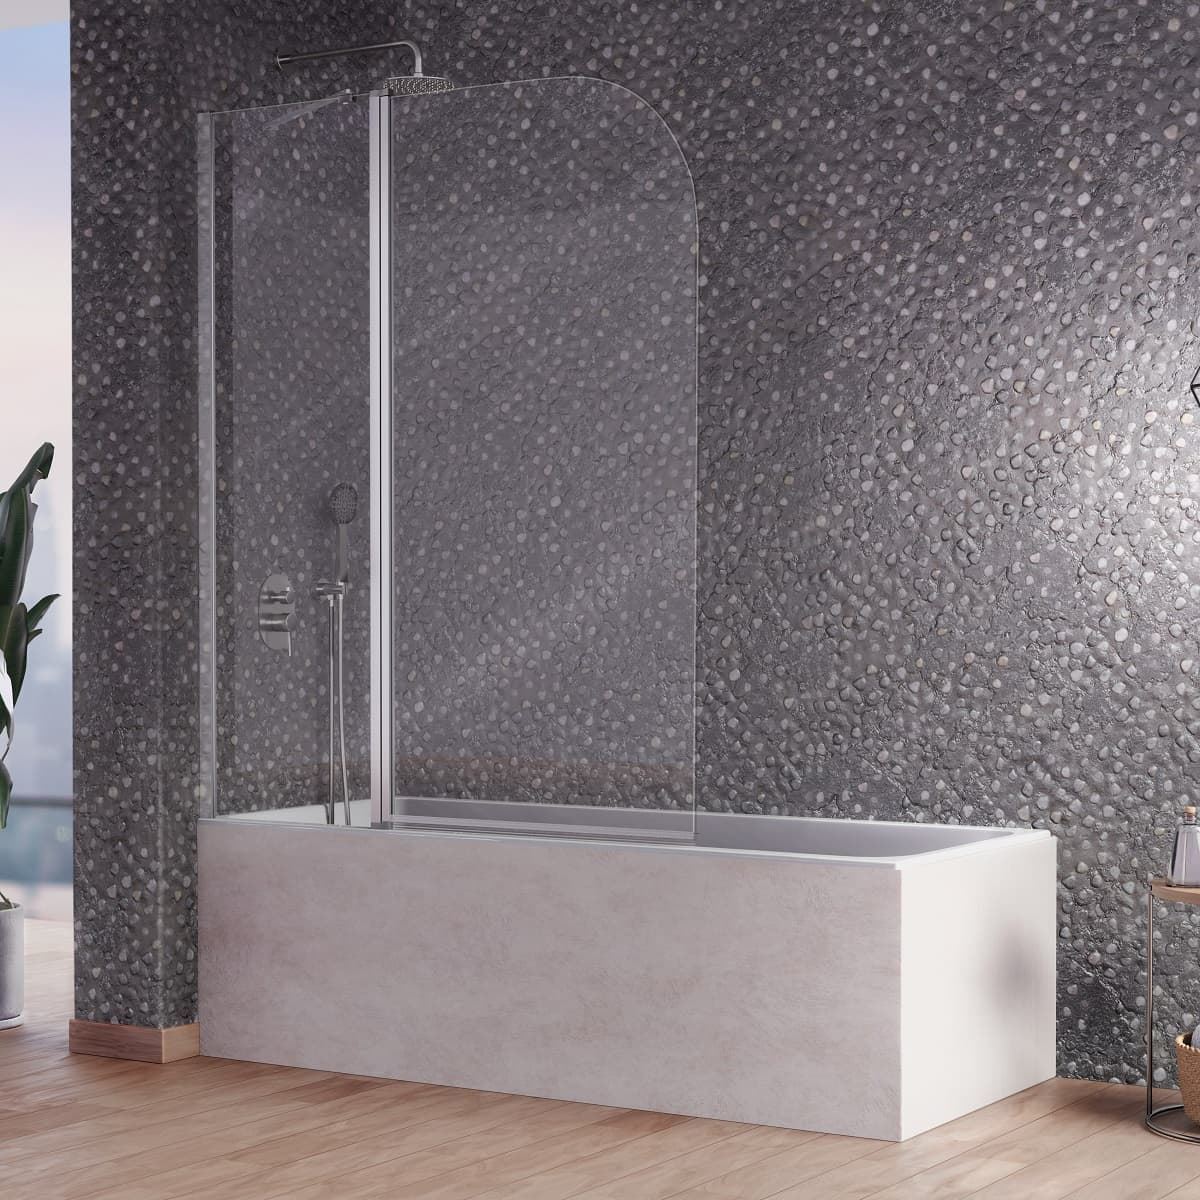 Mampara de bañera doble hoja de cristal fija + abatible plata brillo modelo RITA - Imagen 1